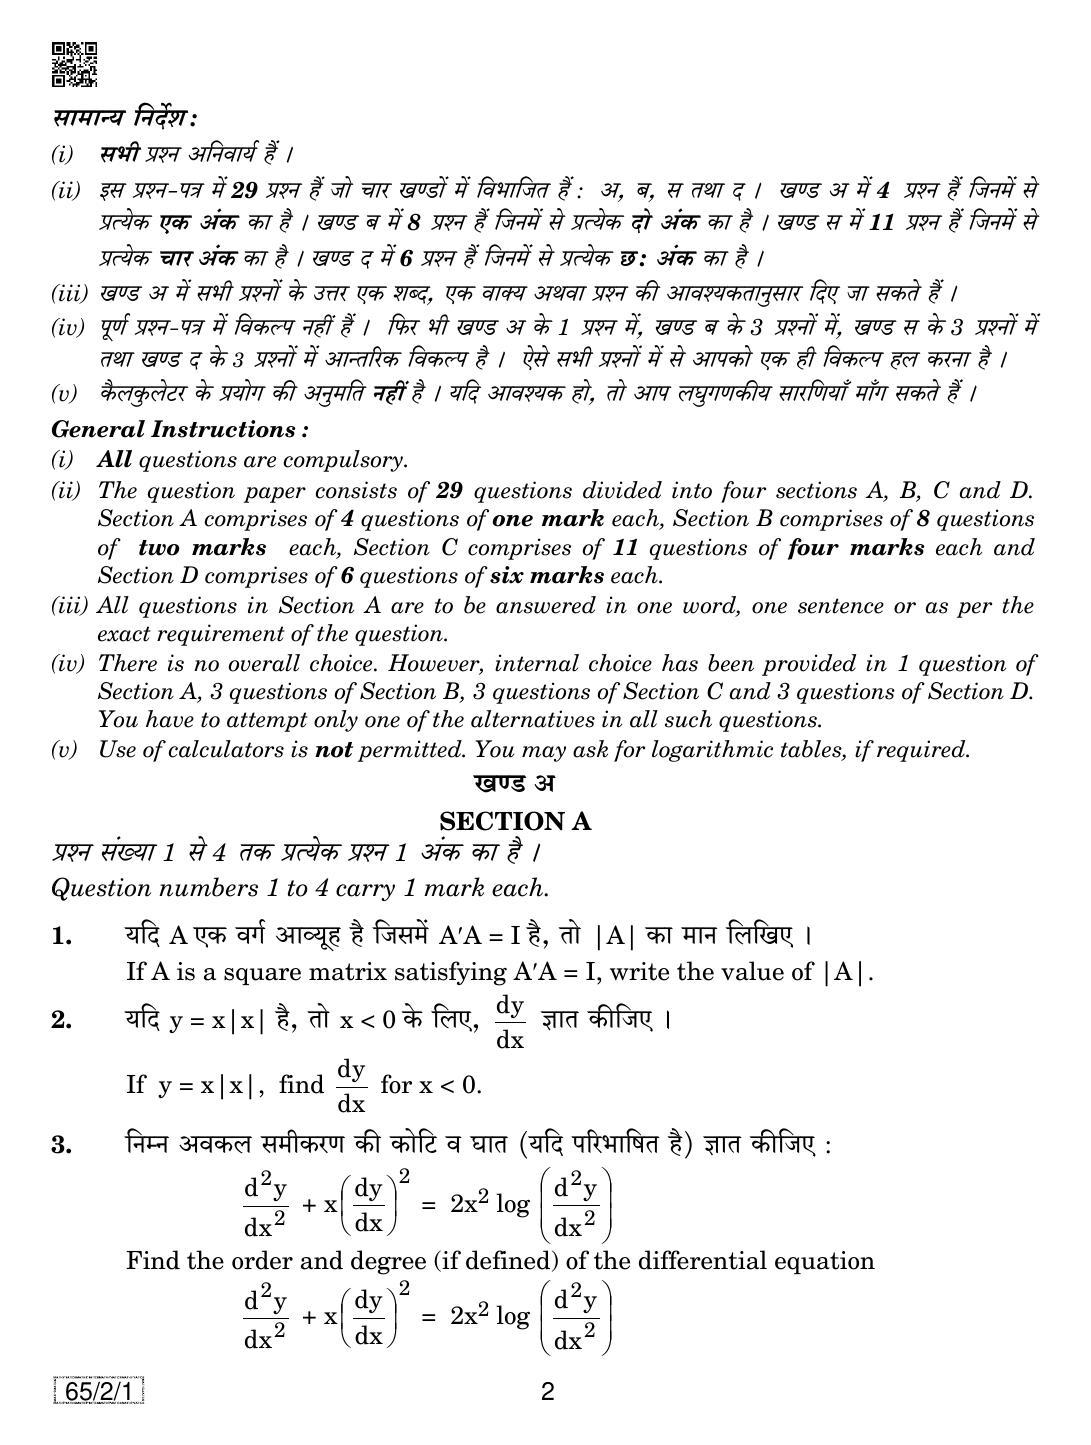 CBSE Class 12 65-2-1 Mathematics 2019 Question Paper - Page 2